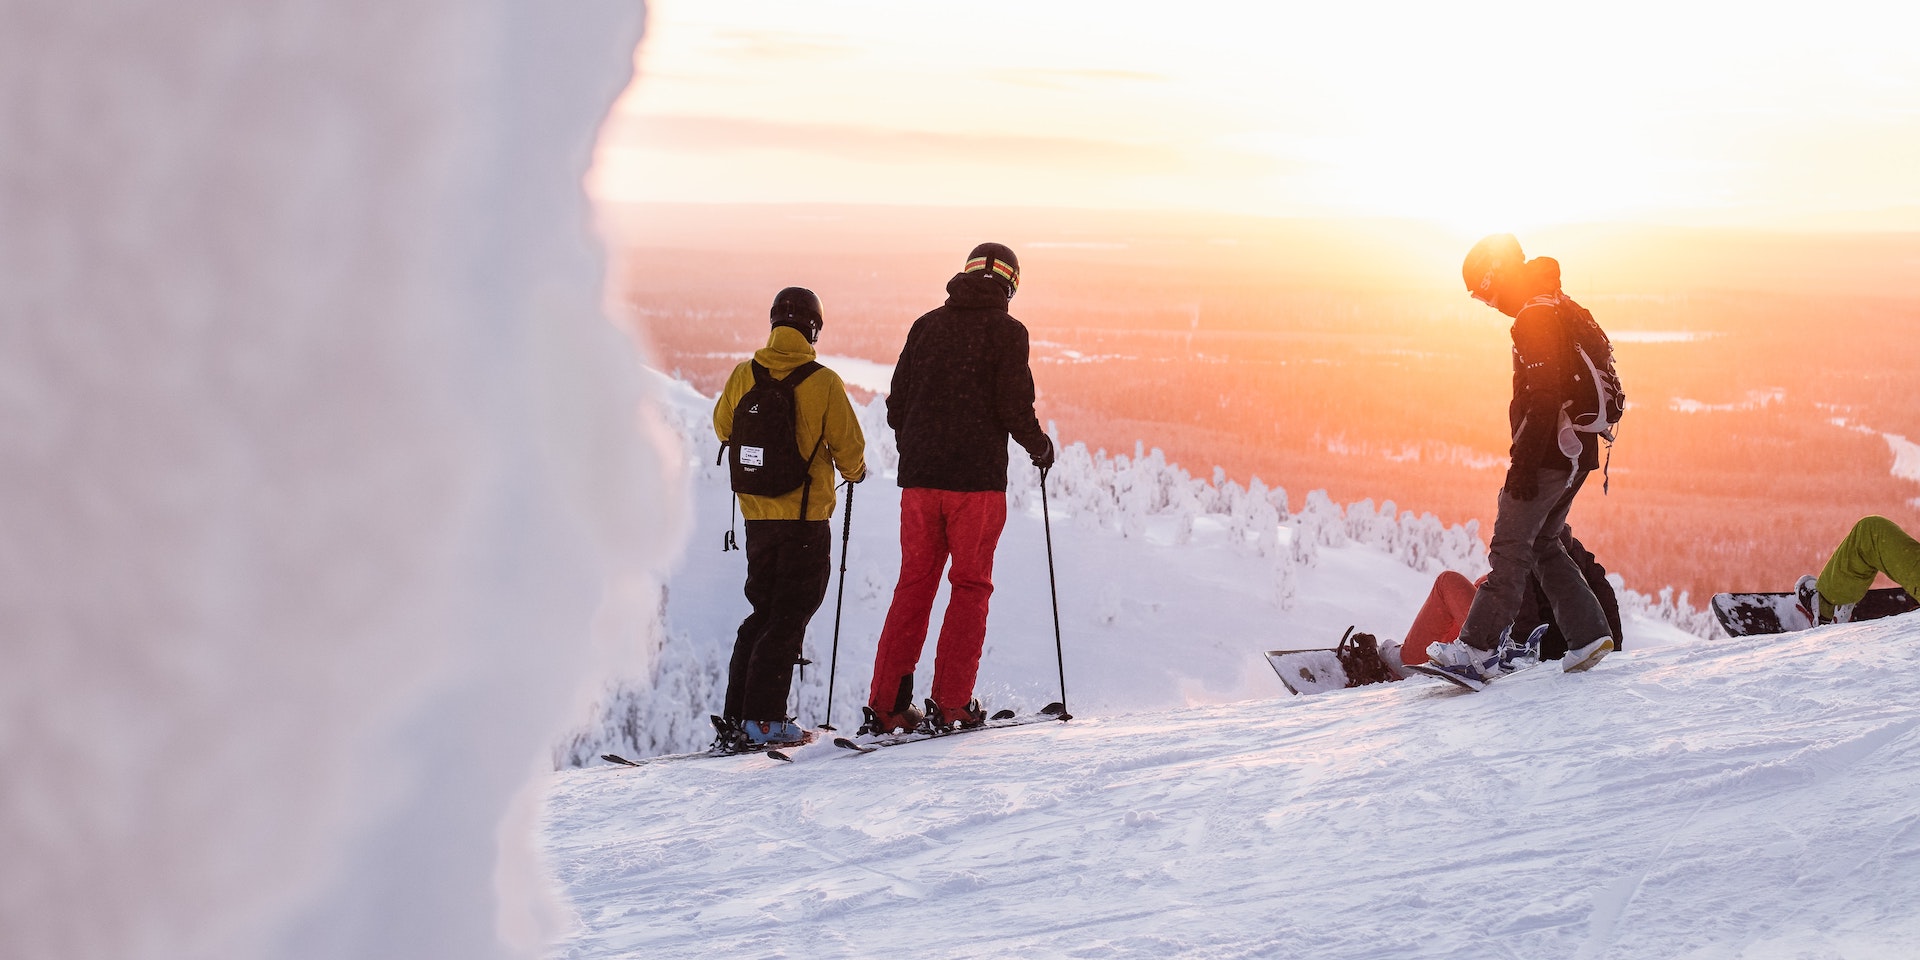 People skiing during sunset